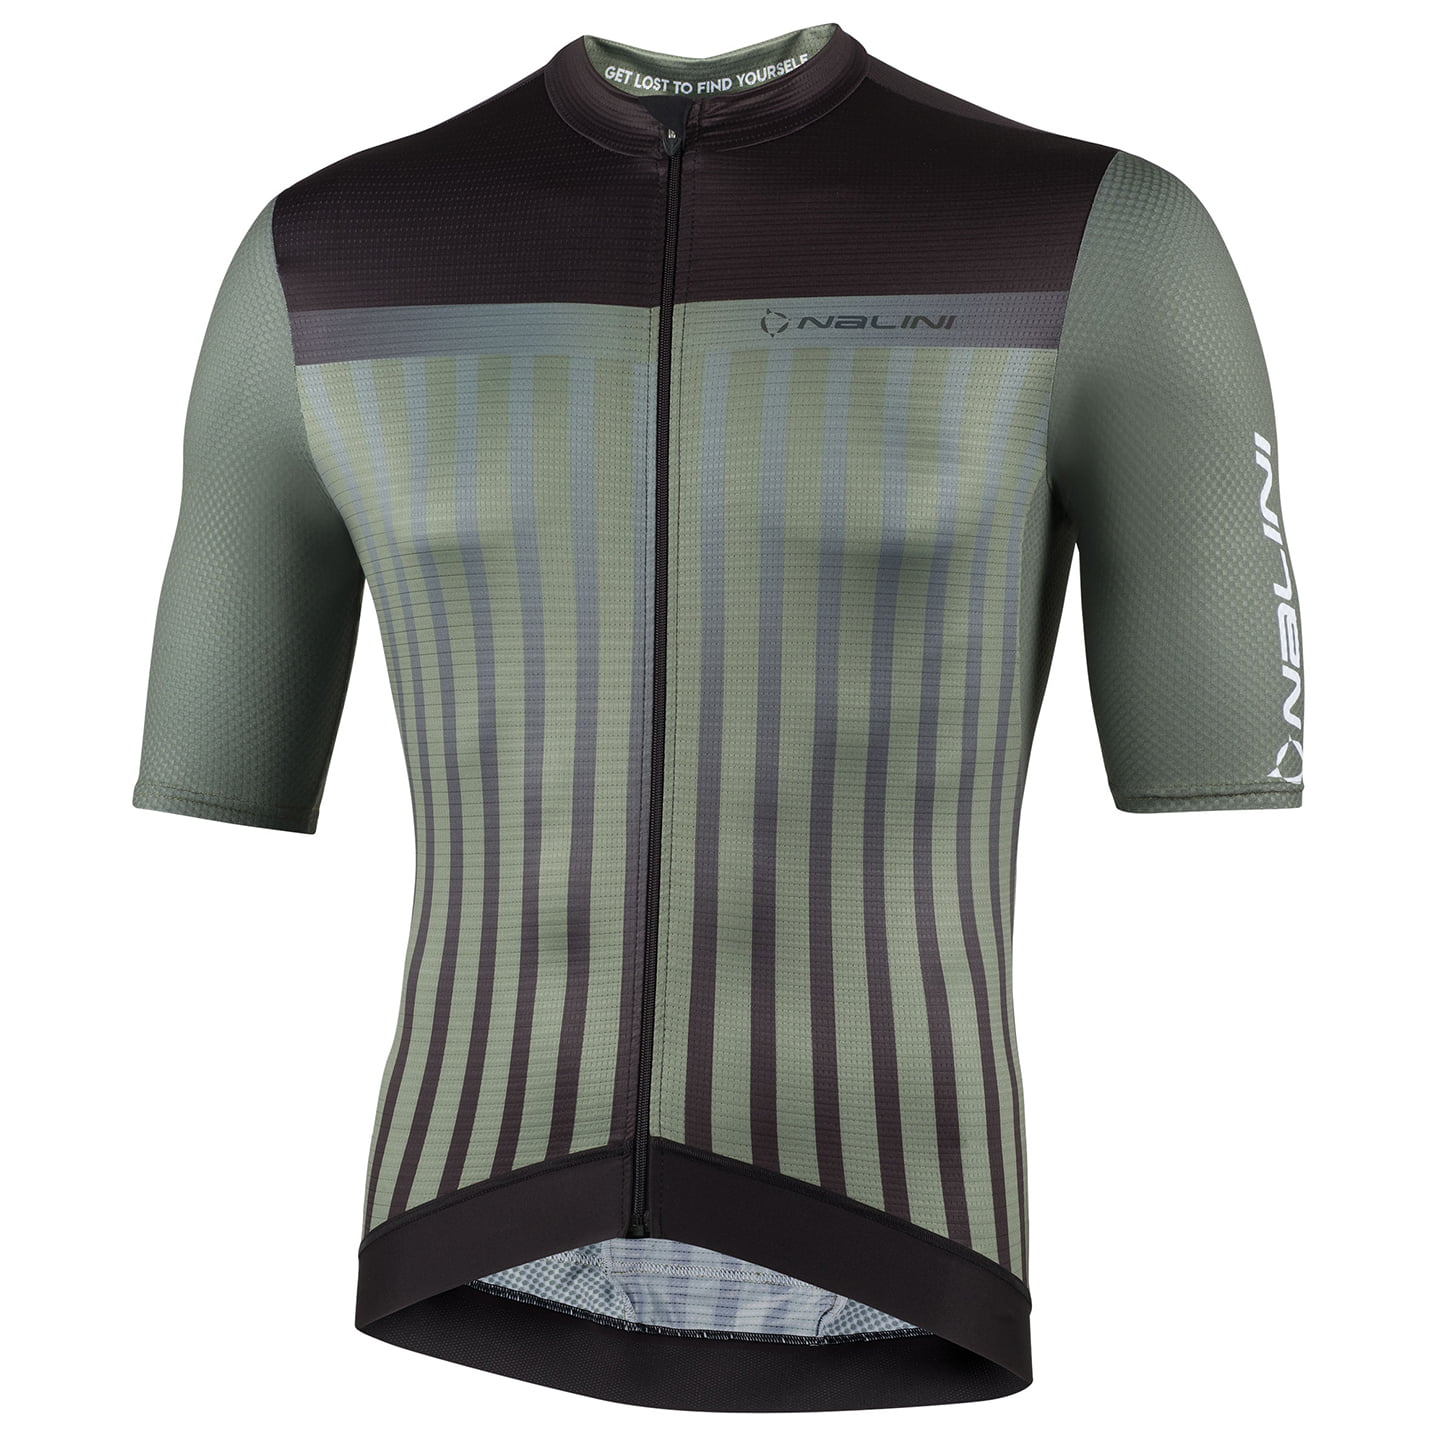 NALINI New Respect Short Sleeve Jersey Short Sleeve Jersey, for men, size M, Cycling jersey, Cycling clothing